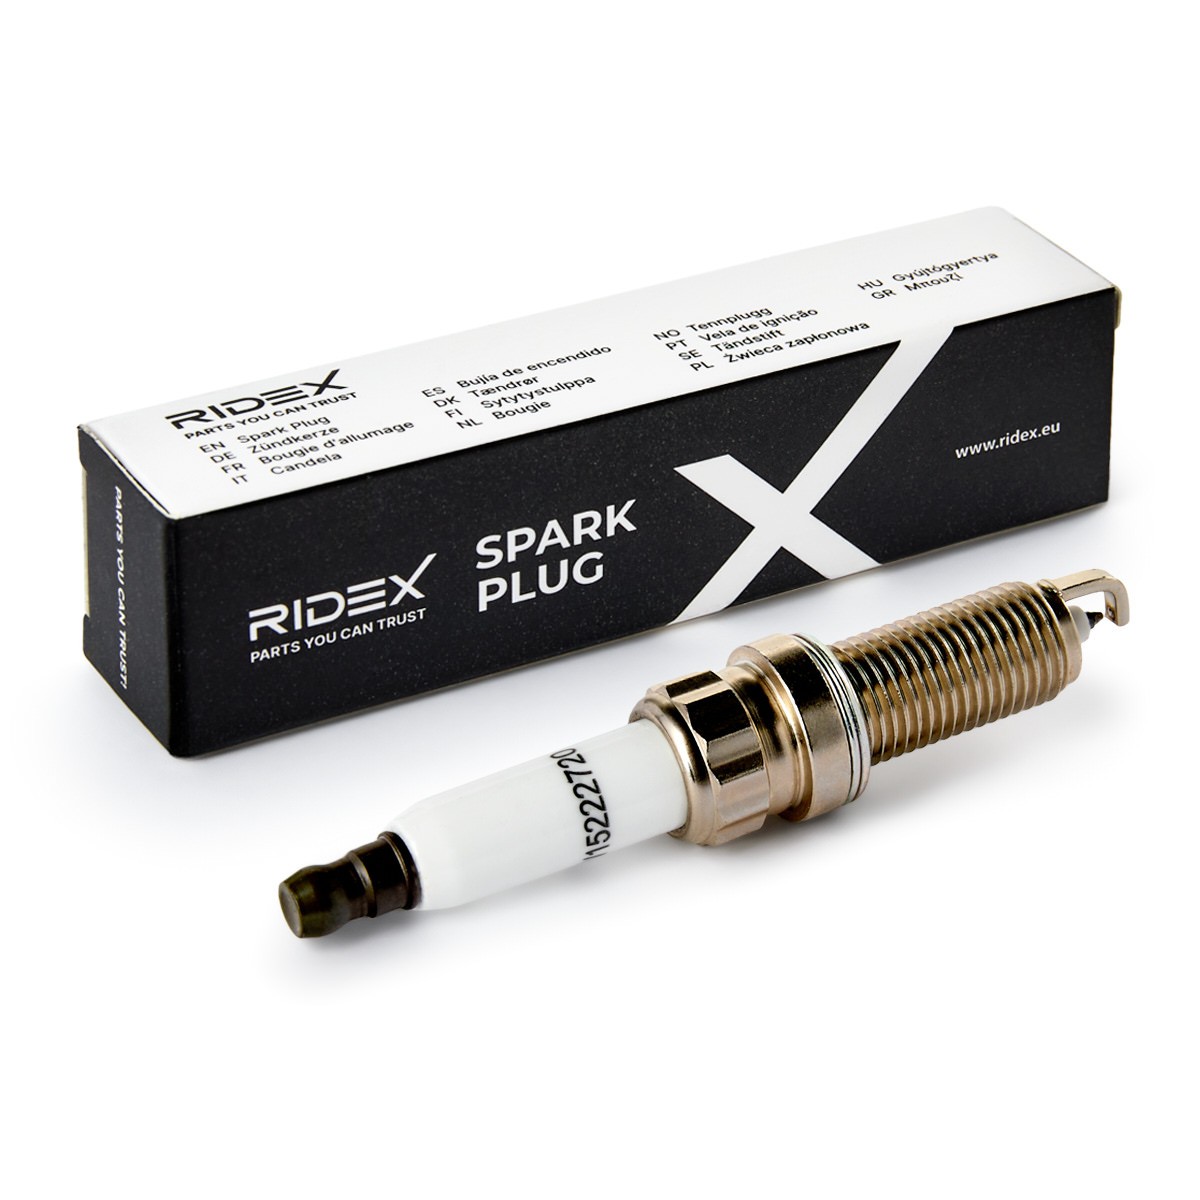 RIDEX 686S0110 Spark plug M12x1,25, Spanner Size: 14 mm Bi-Hex